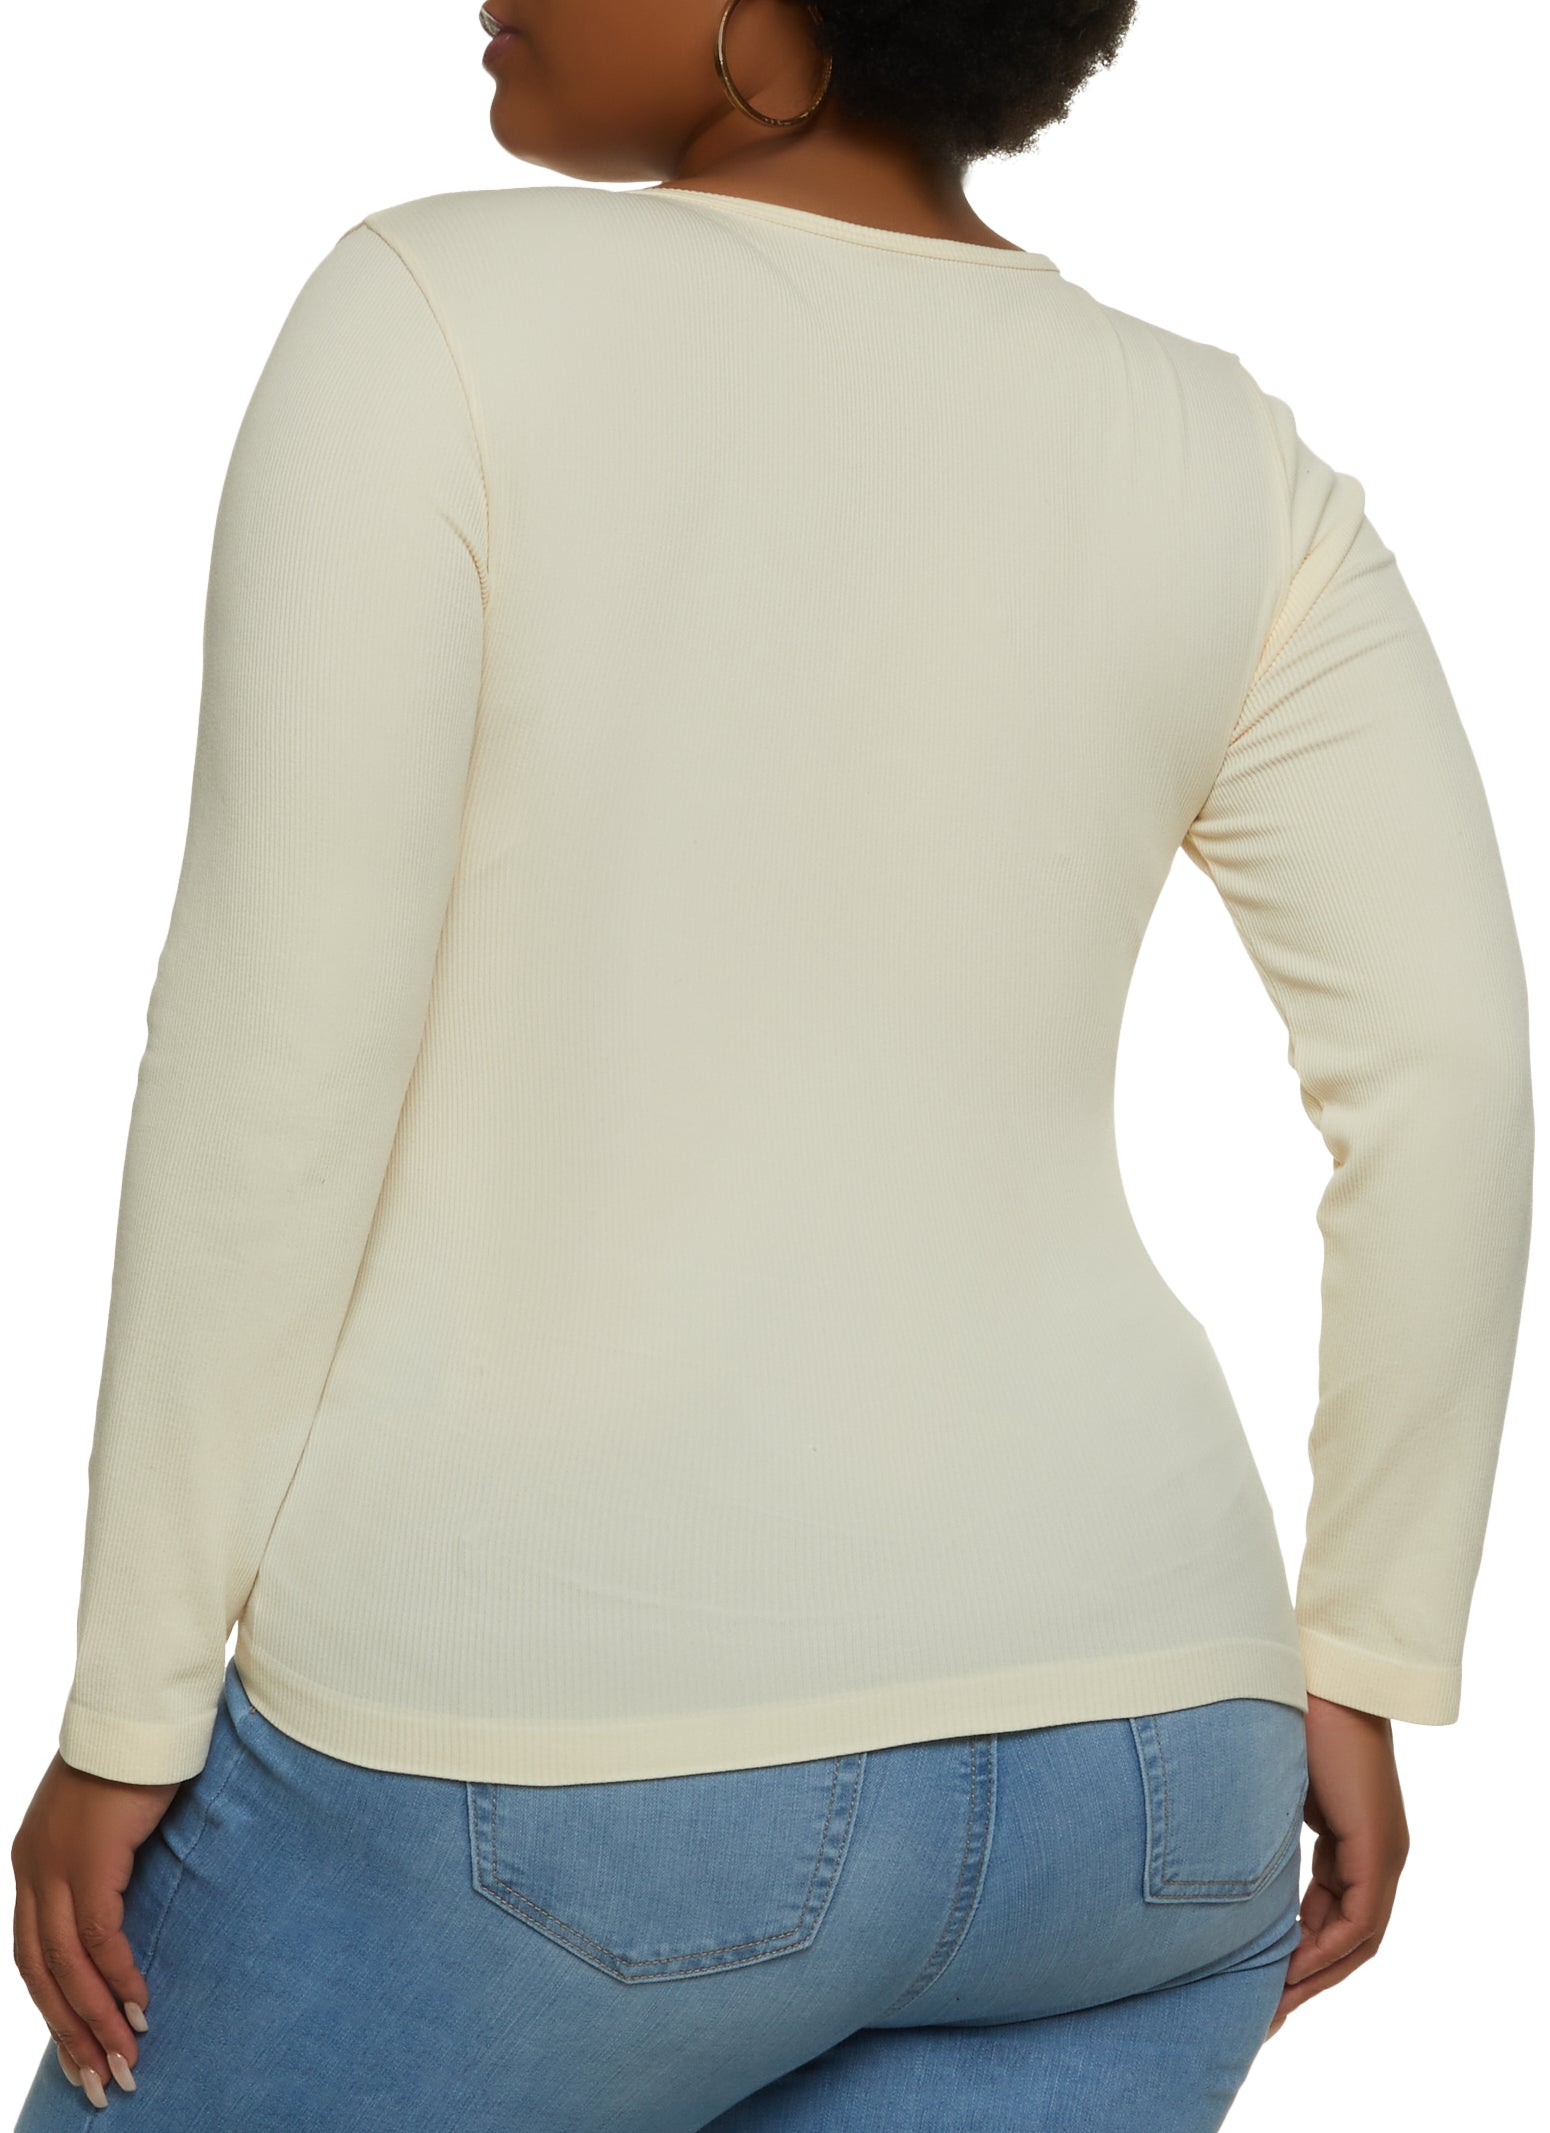 Women's Plus Size Solid Seamless Long Sleeve Shirt. • Seamless